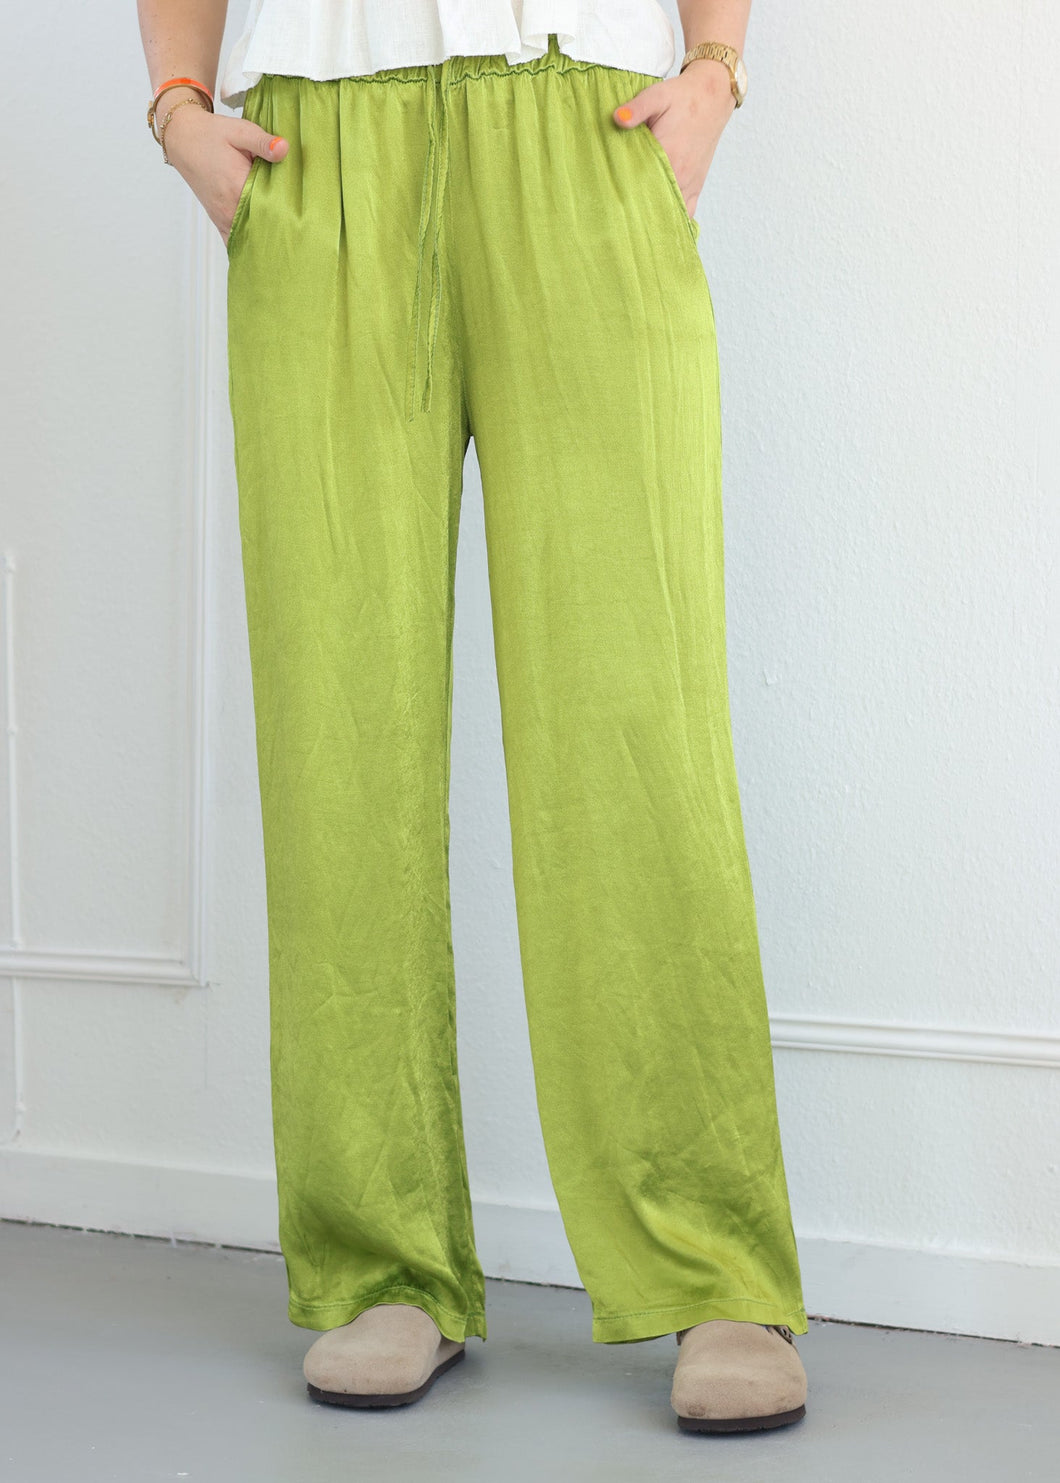 ByHan Silk Pants Lime - meer kleuren